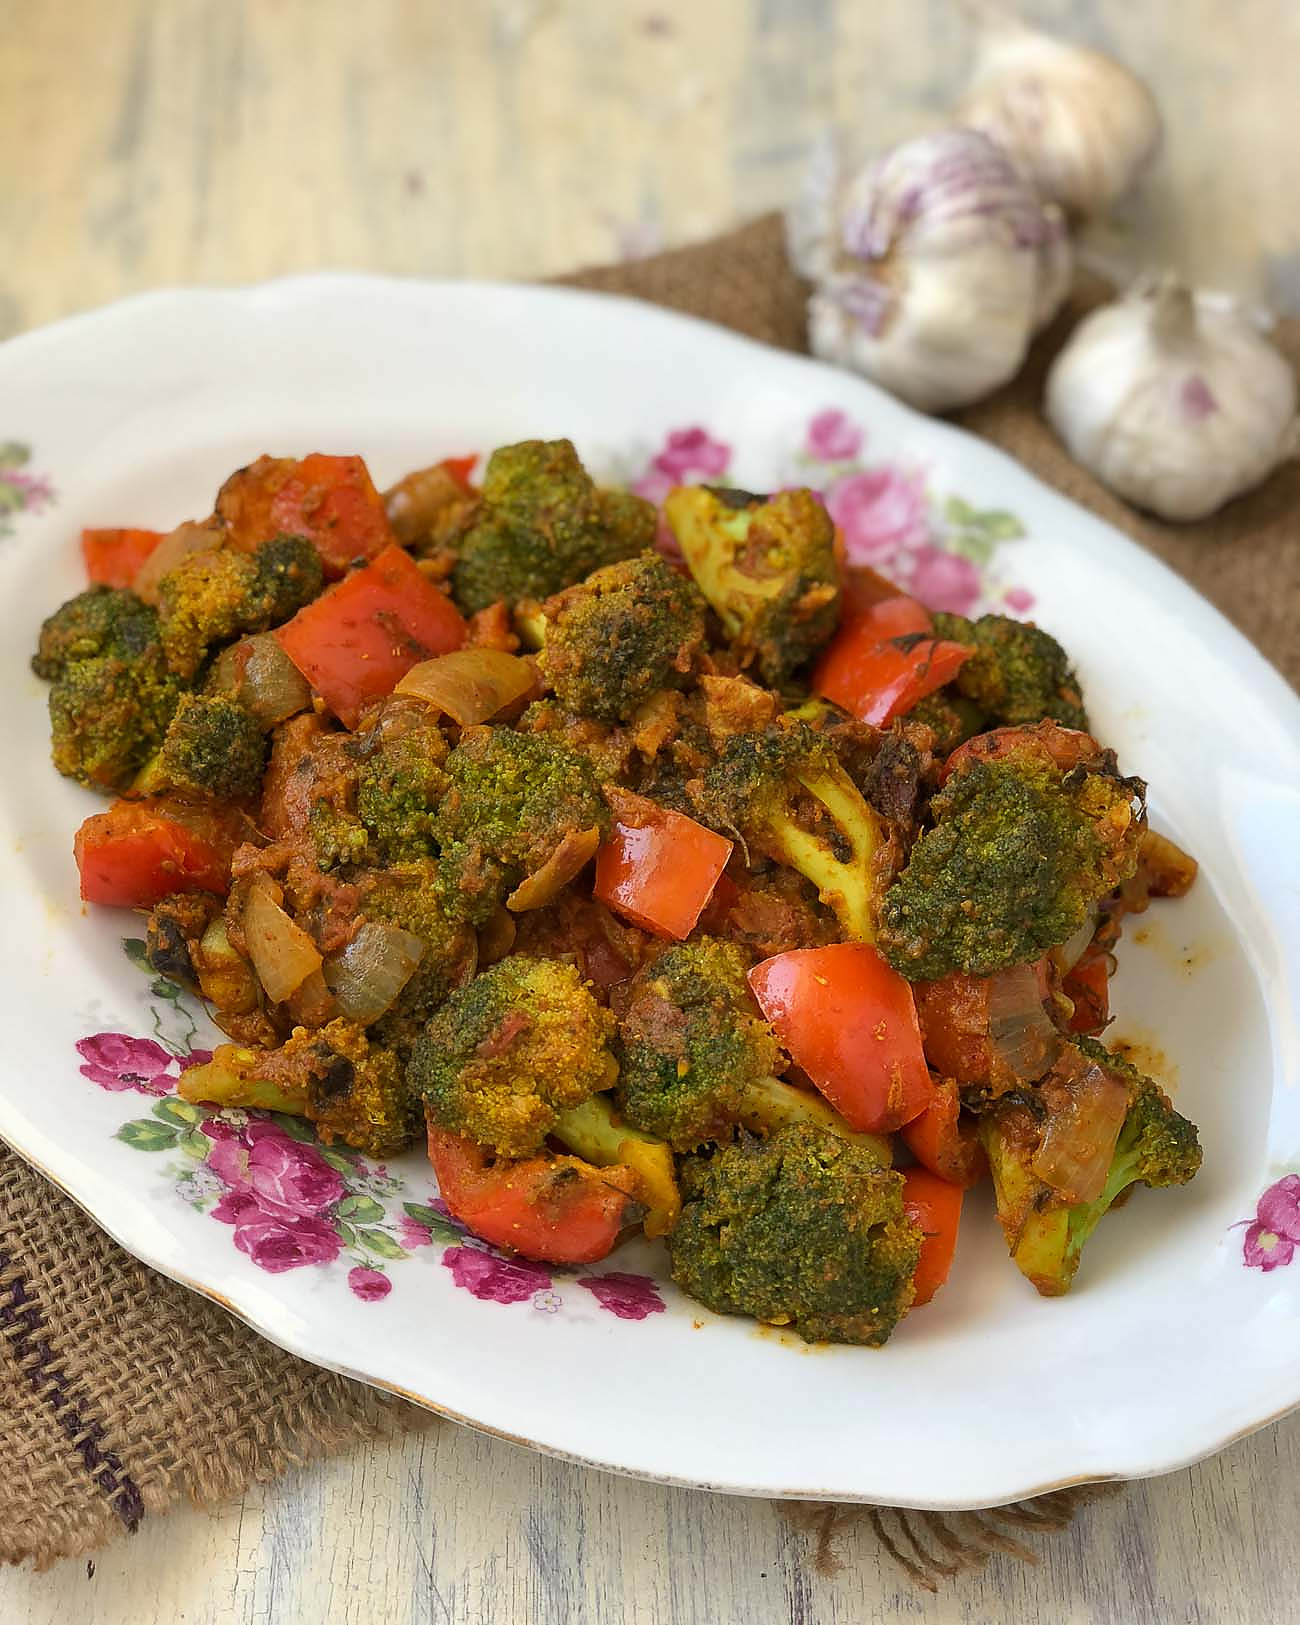 https://www.archanaskitchen.com/images/archanaskitchen/0-Archanas-Kitchen-Recipes/Kadai_Broccoli_Masala_Recipe_-_Broccoli_Cooked_With_Indian_Spices-1_1600.jpg